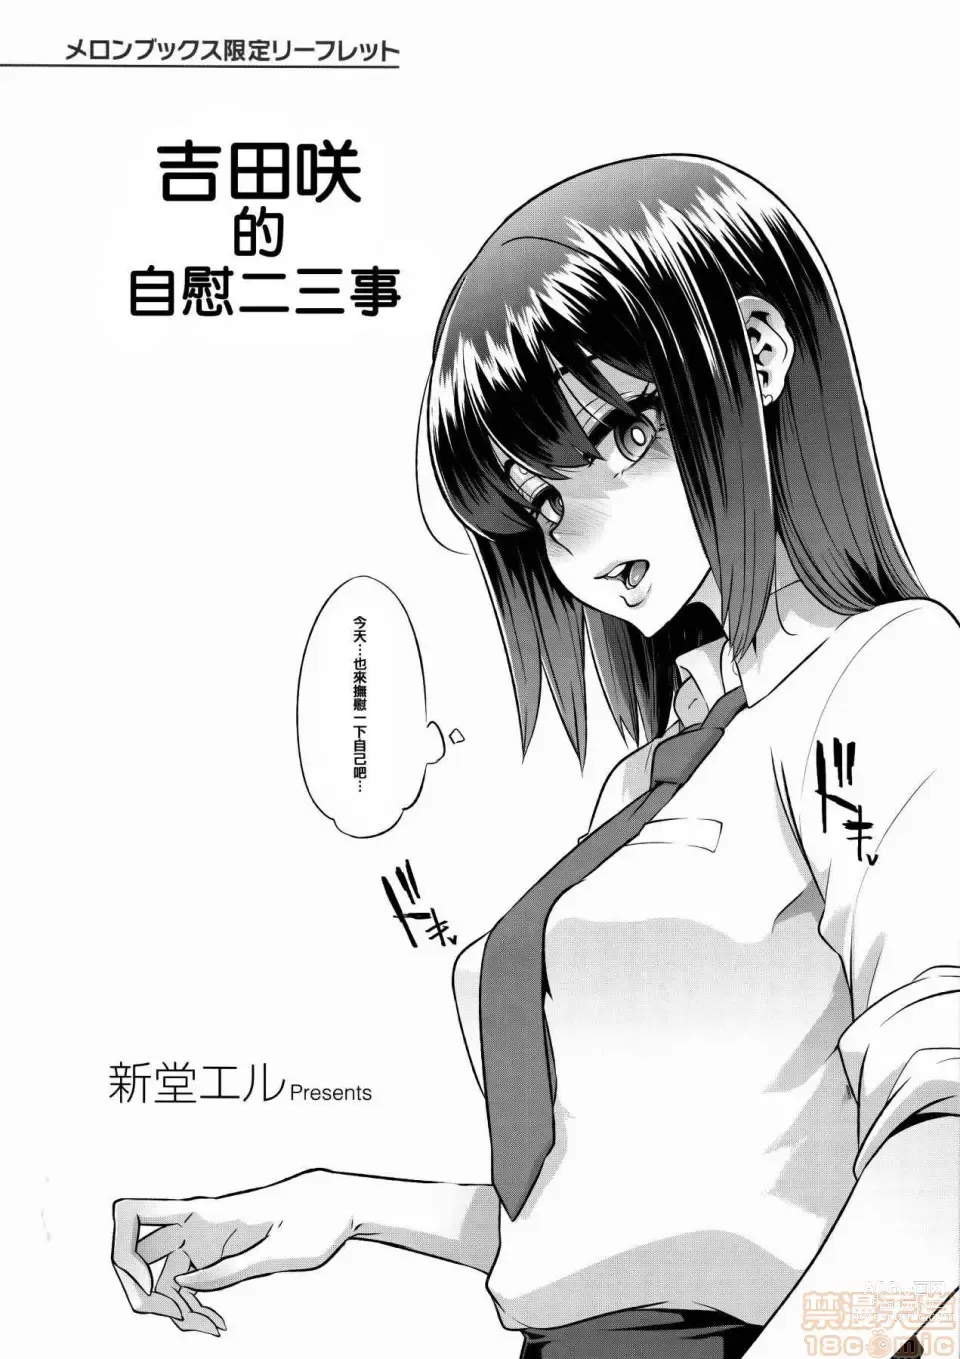 Page 249 of manga Henshin